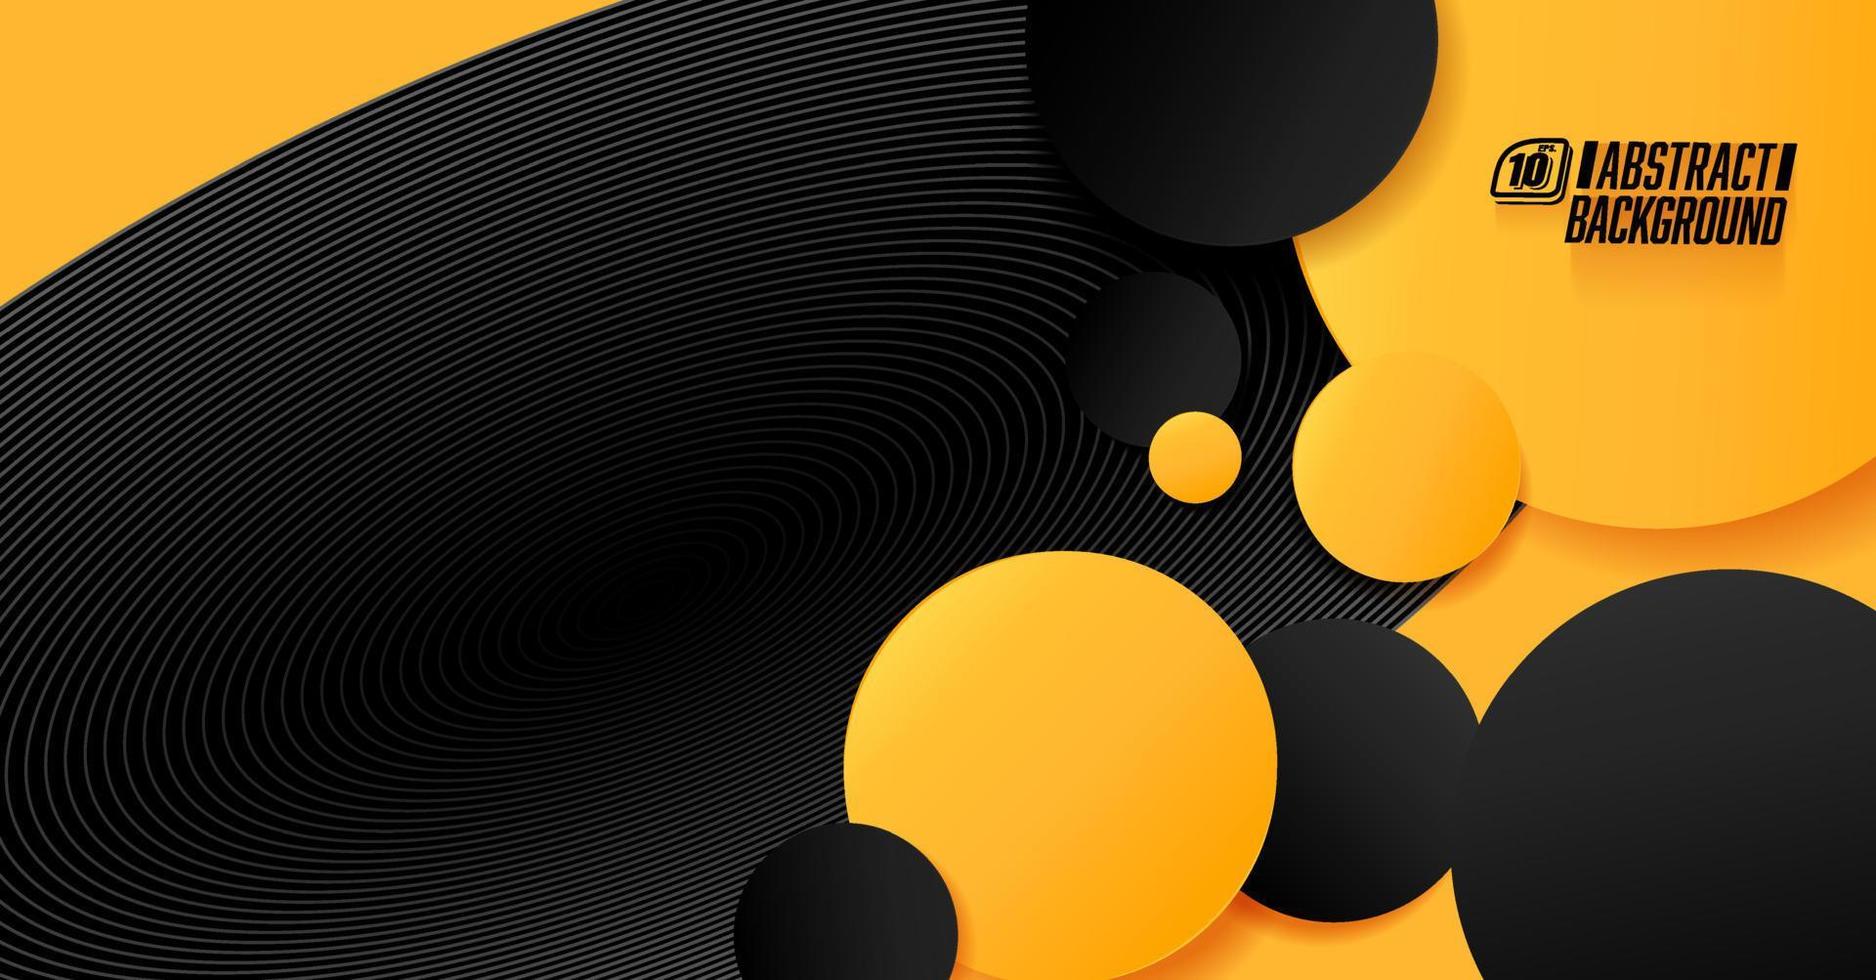 zwarte en gele cirkels abstract tech banner ontwerp. geometrische vector achtergrond